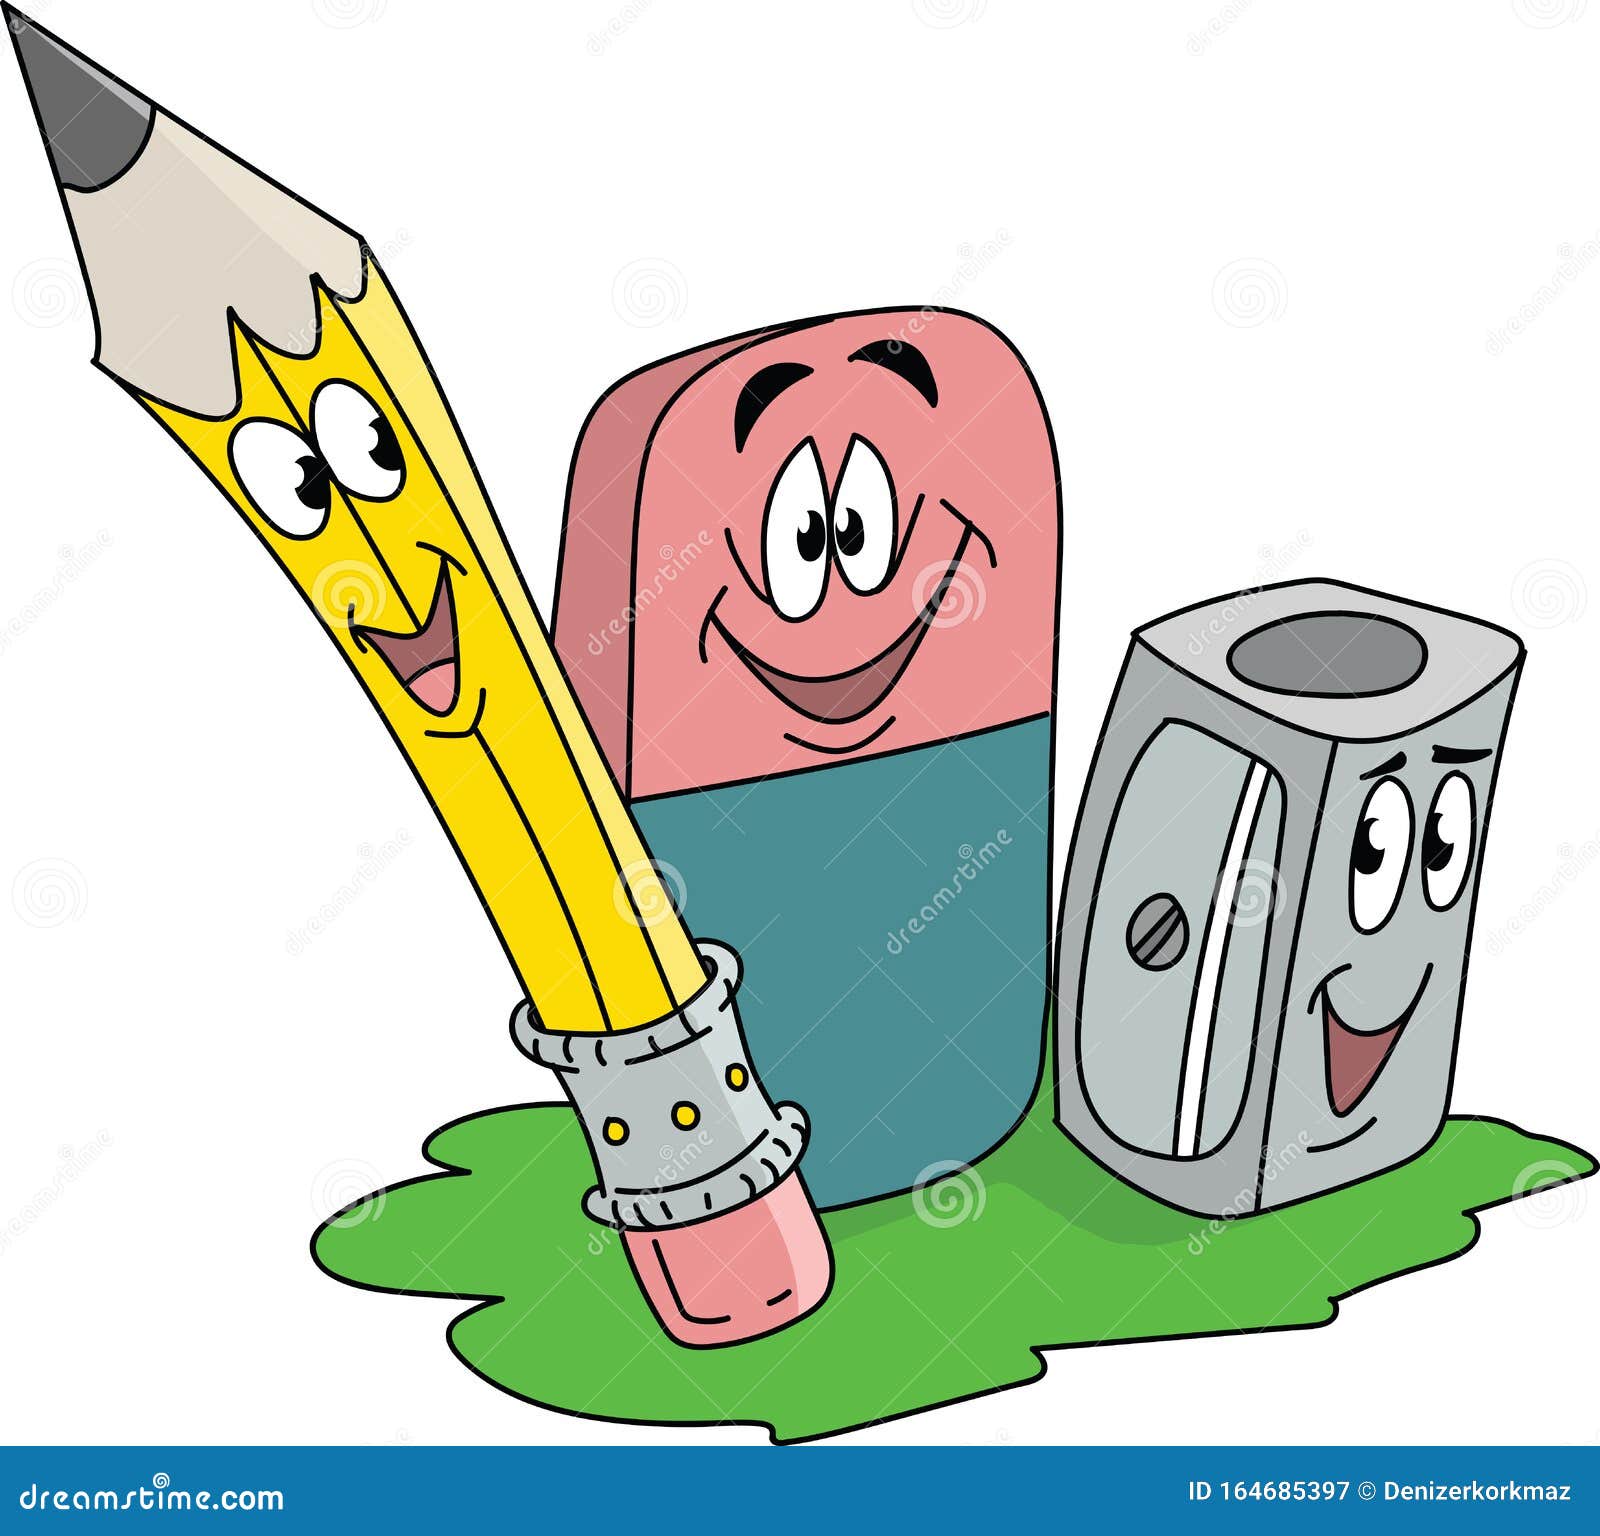 Pencil With Eraser. Stock Photo | CartoonDealer.com #26030970